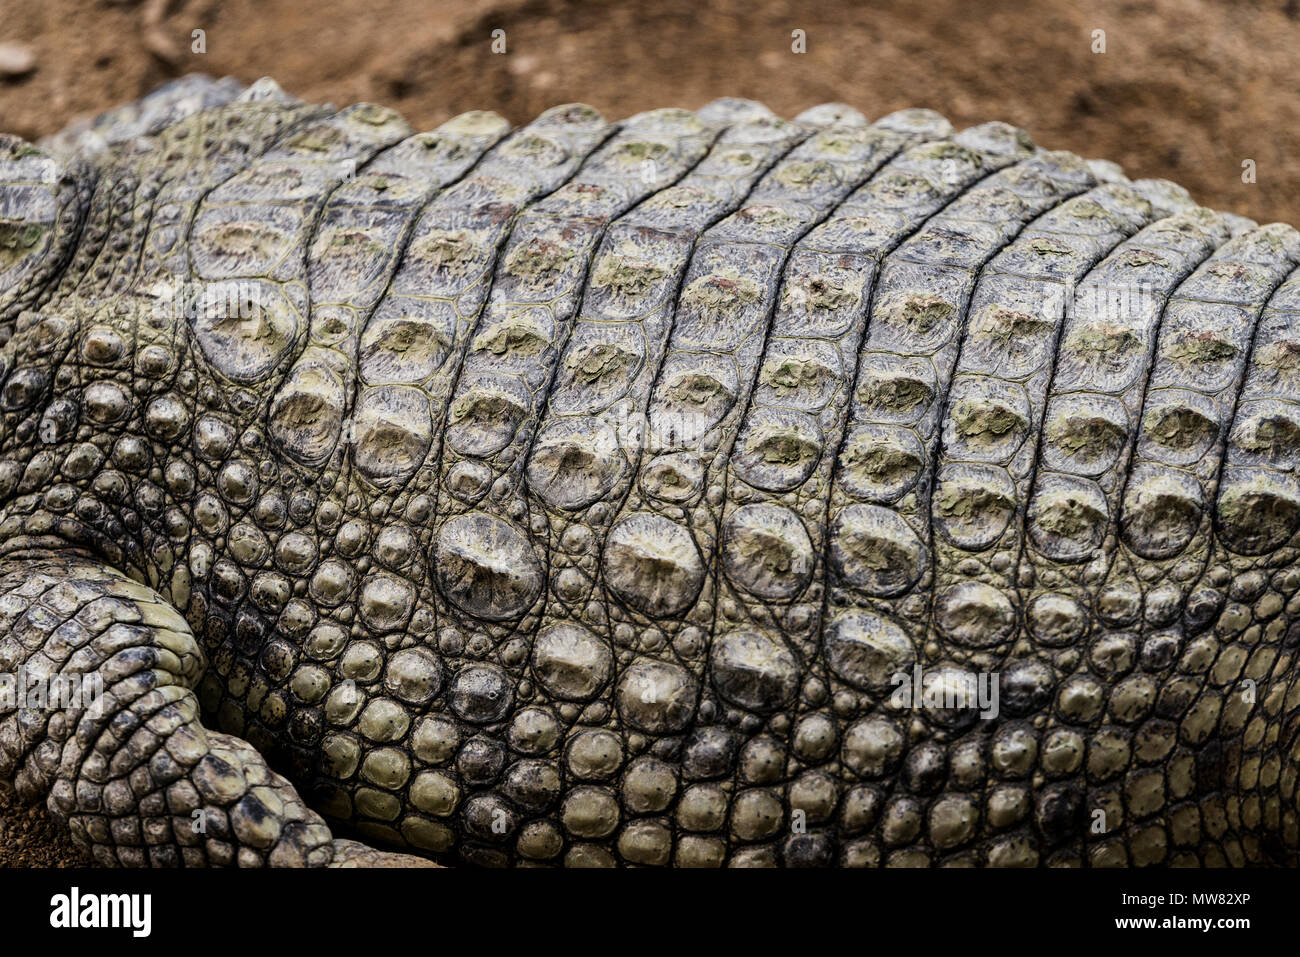 3,850 Crocodile Skin Close Up Stock Photos - Free & Royalty-Free